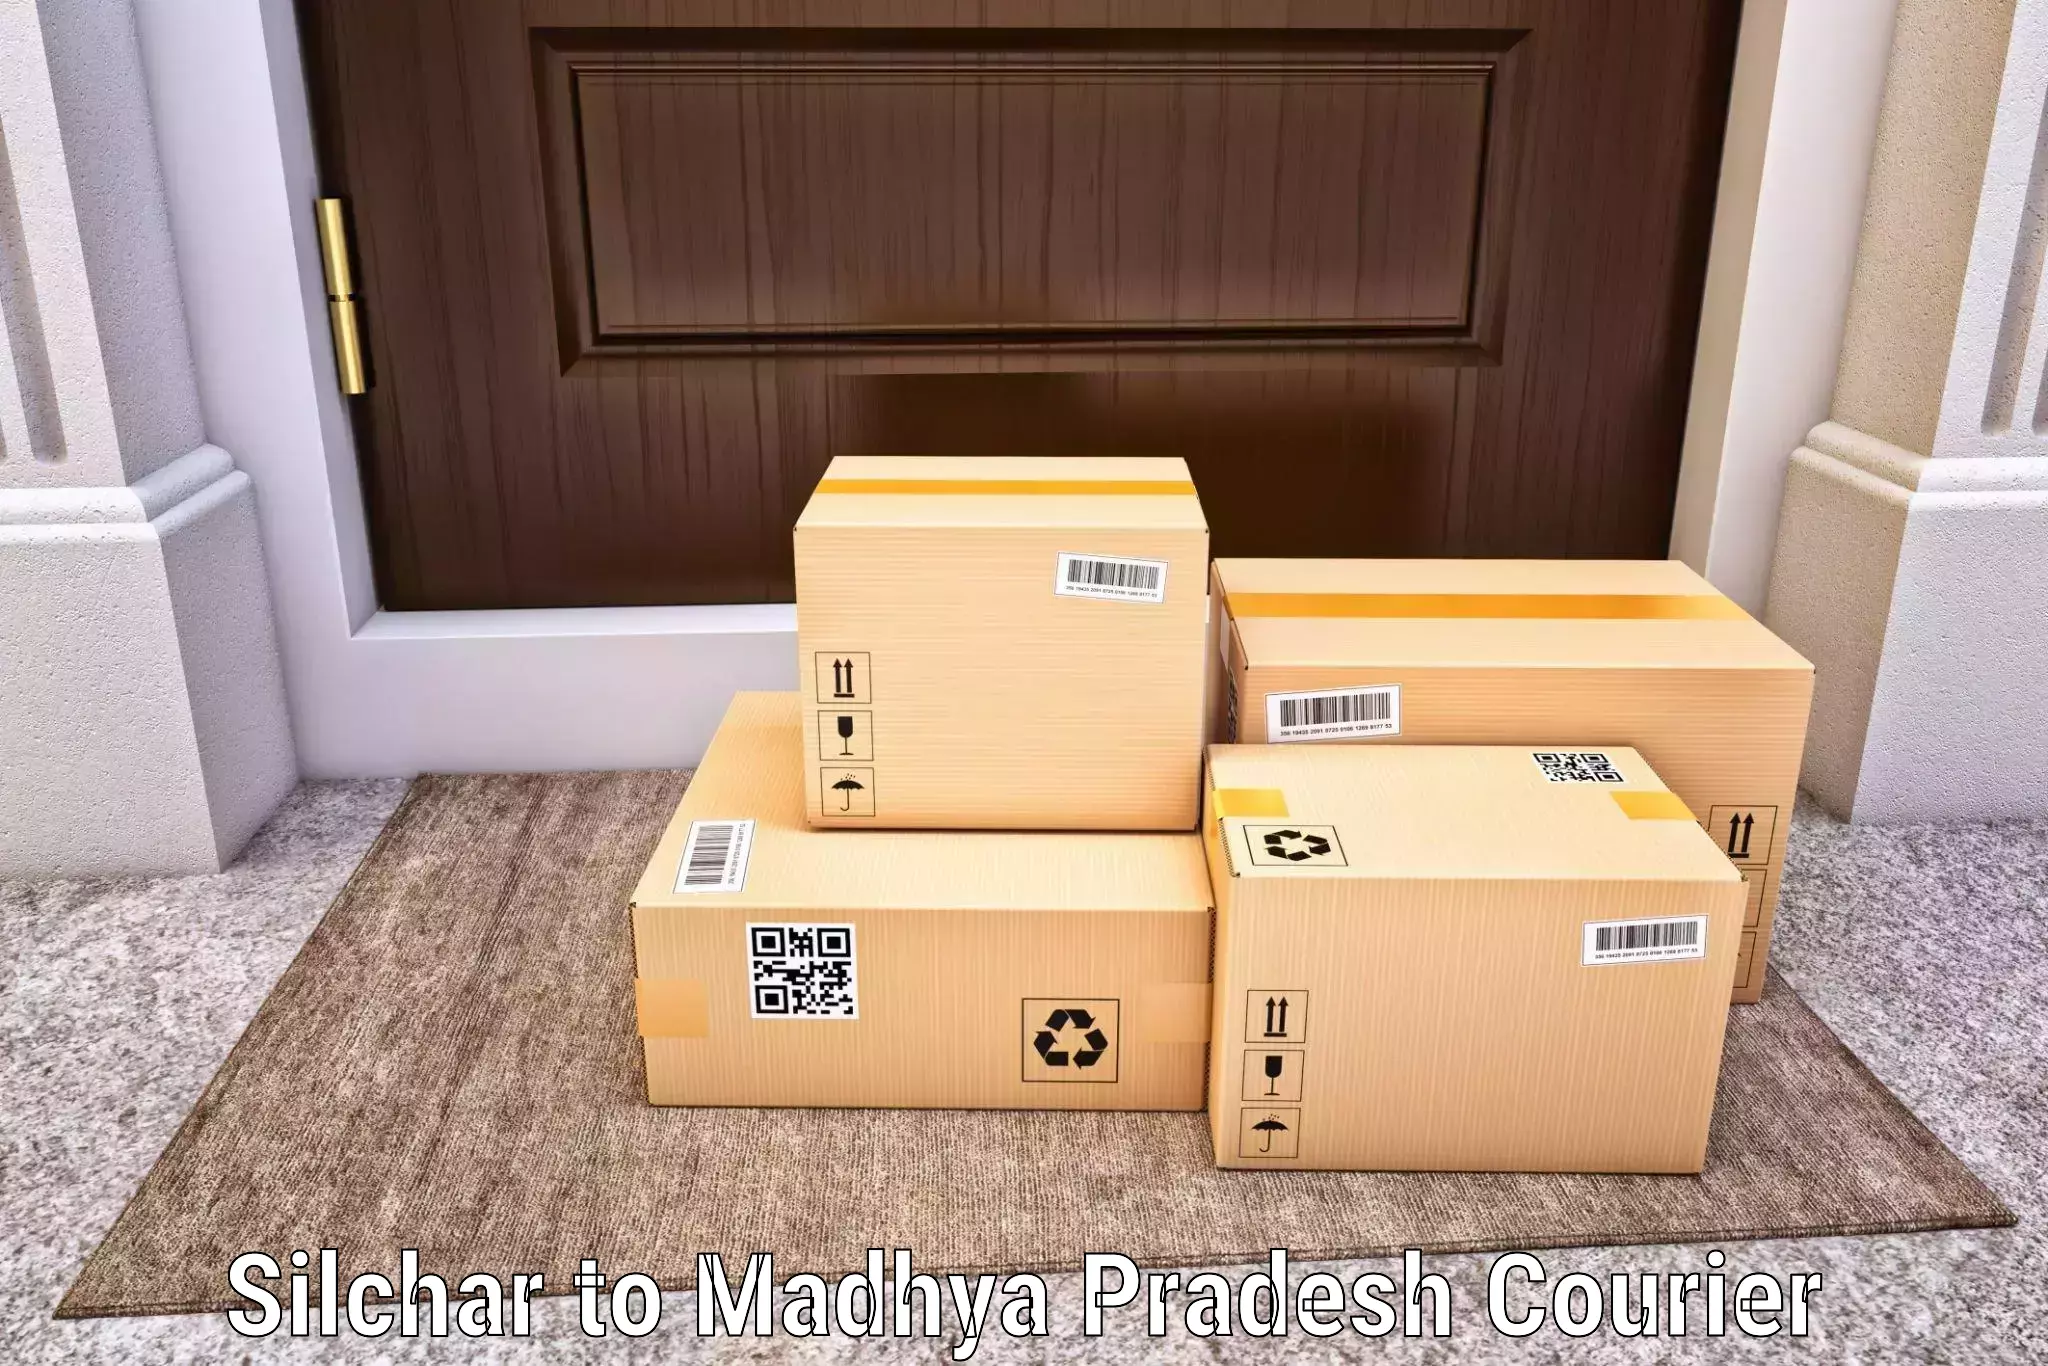 Custom courier packaging in Silchar to Sohagi